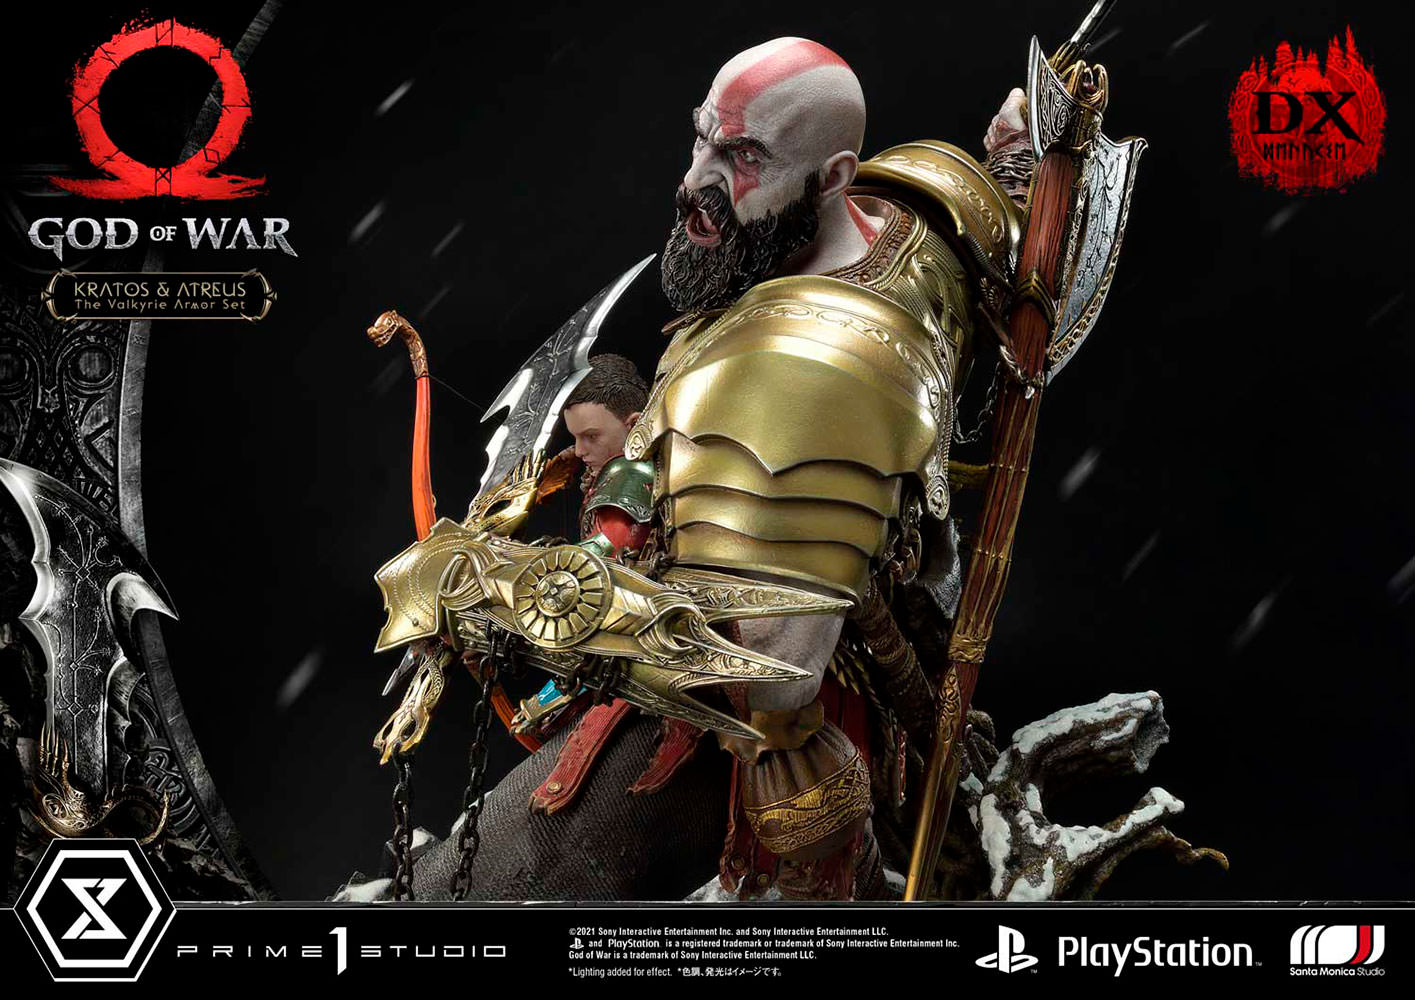 Kratos & Atreus (The Valkyrie Armor Set) Deluxe Version- Prototype Shown